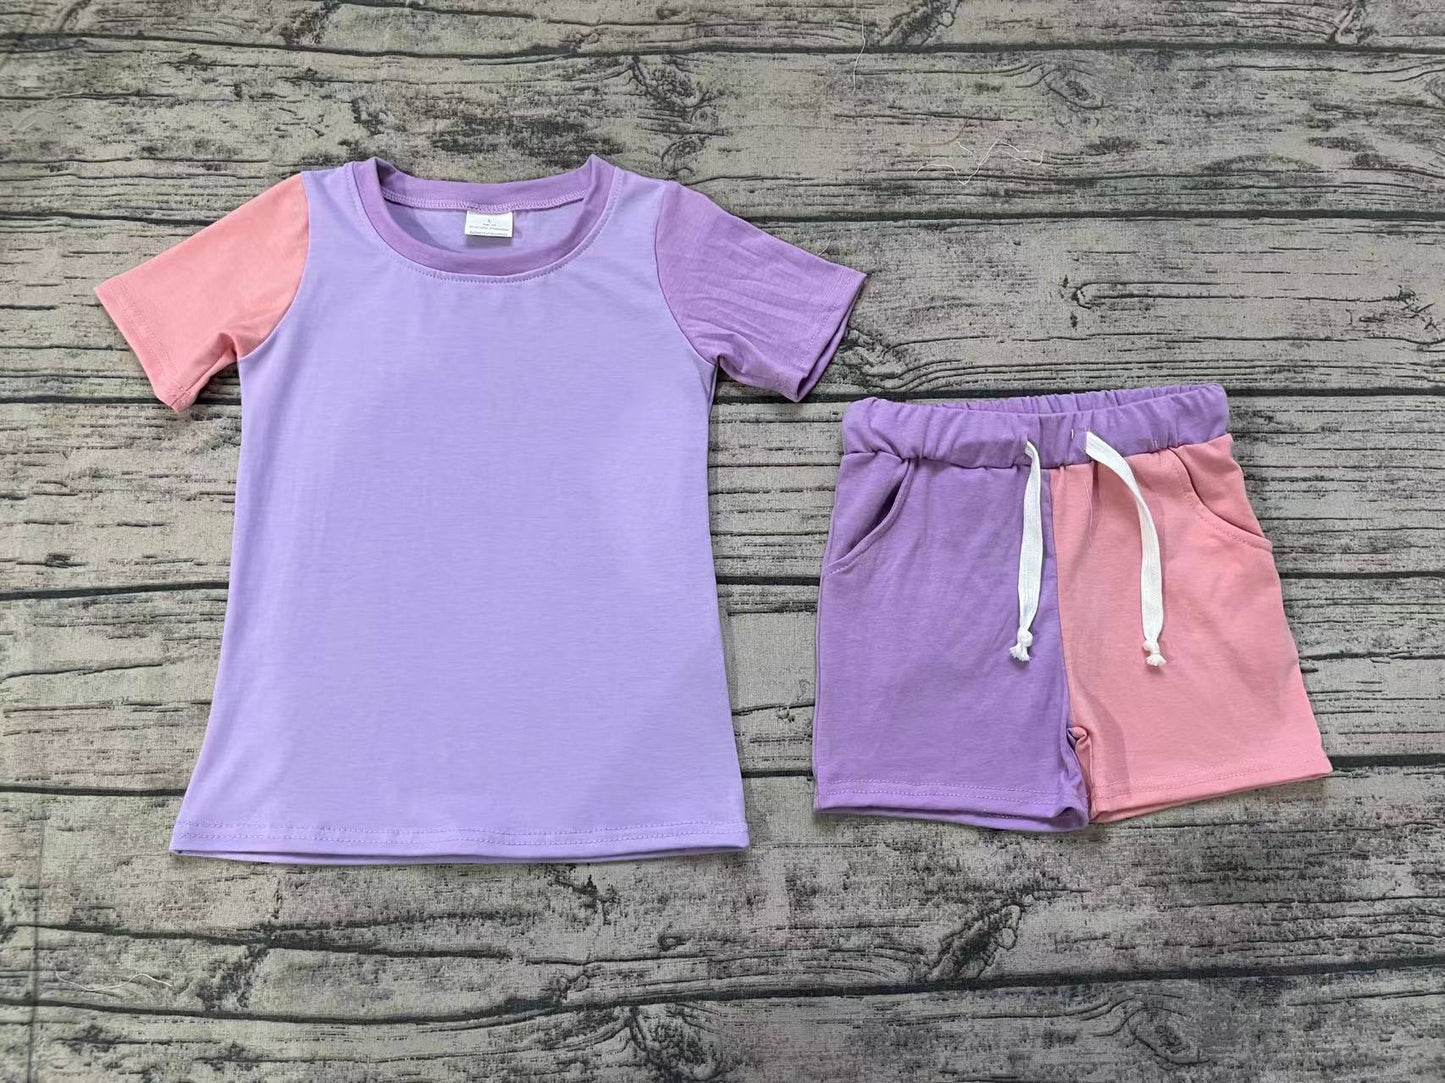 Summer Baby Girls Cotton Purple &  Pink Shorts Set